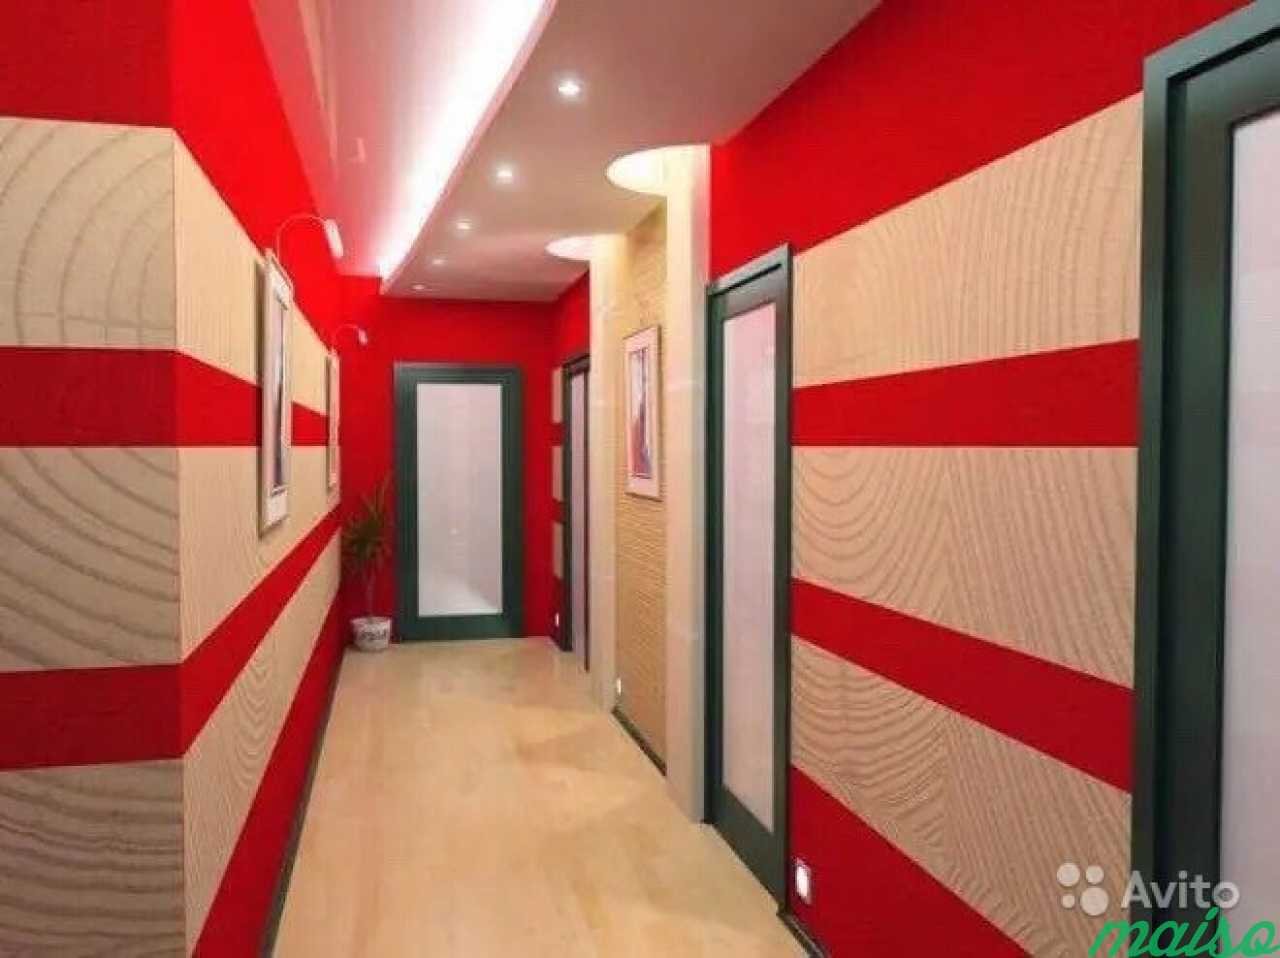 Дизайнерская покраска стен в коридоре